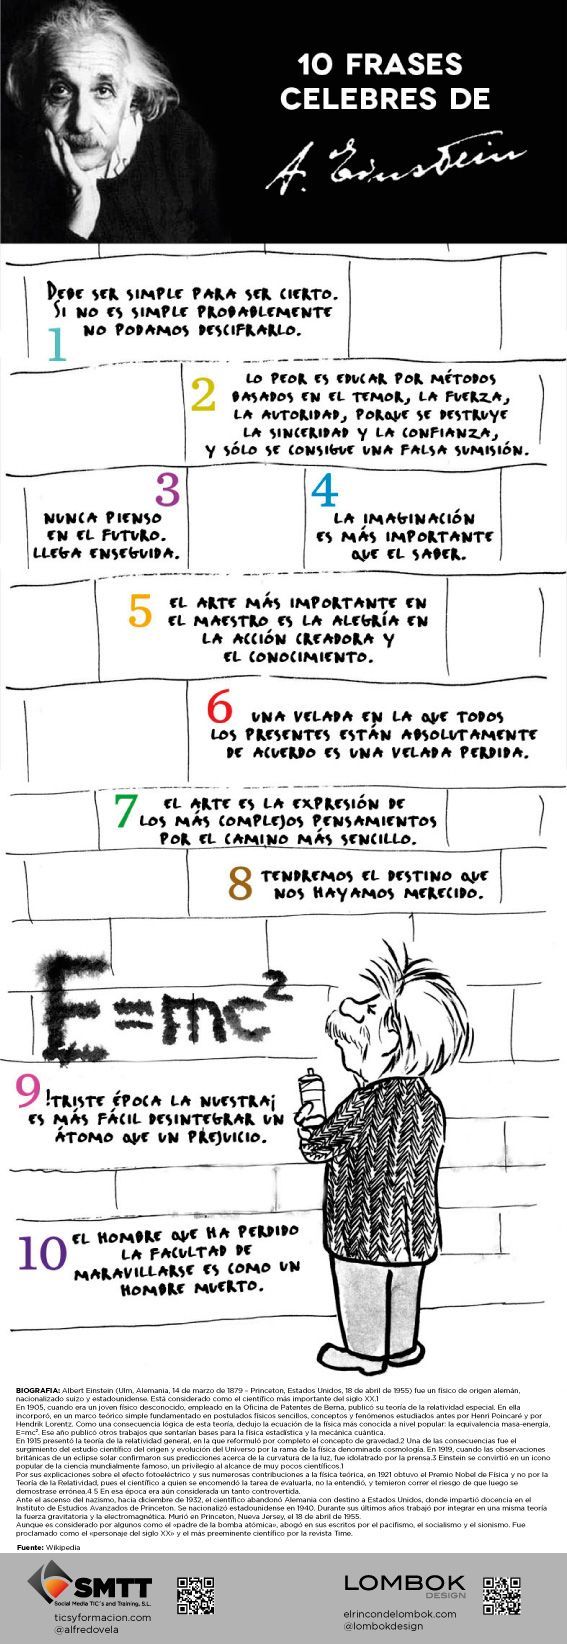 10 frases celebres de Einstein #infografia